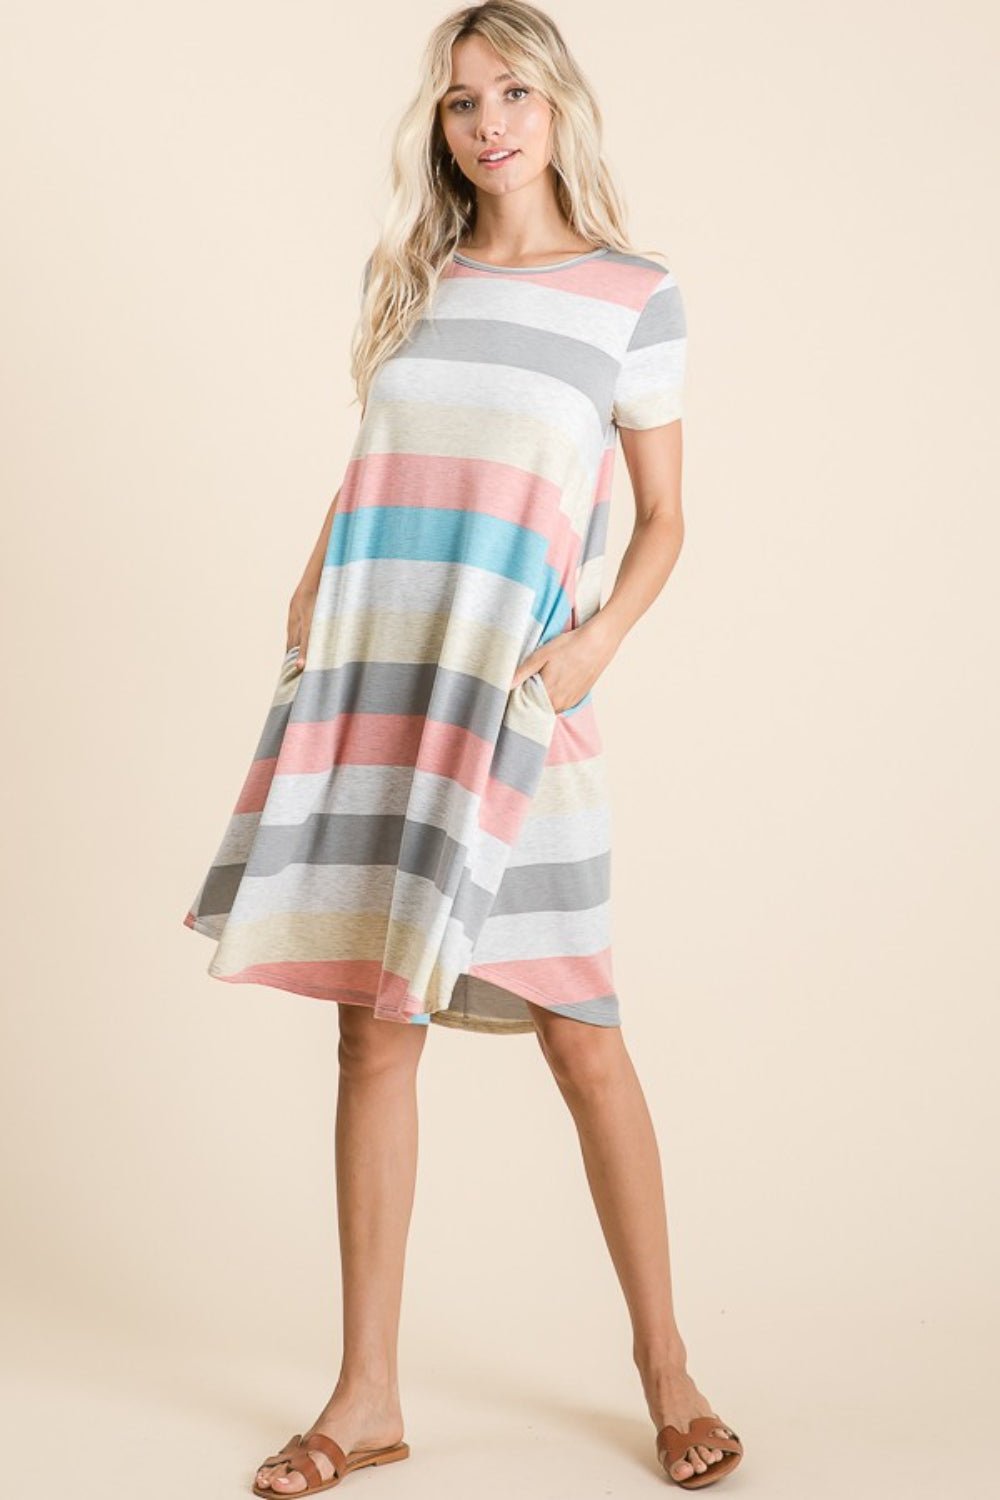 BOMBOM Striped Short Sleeve Dress with Pockets - Admiresty